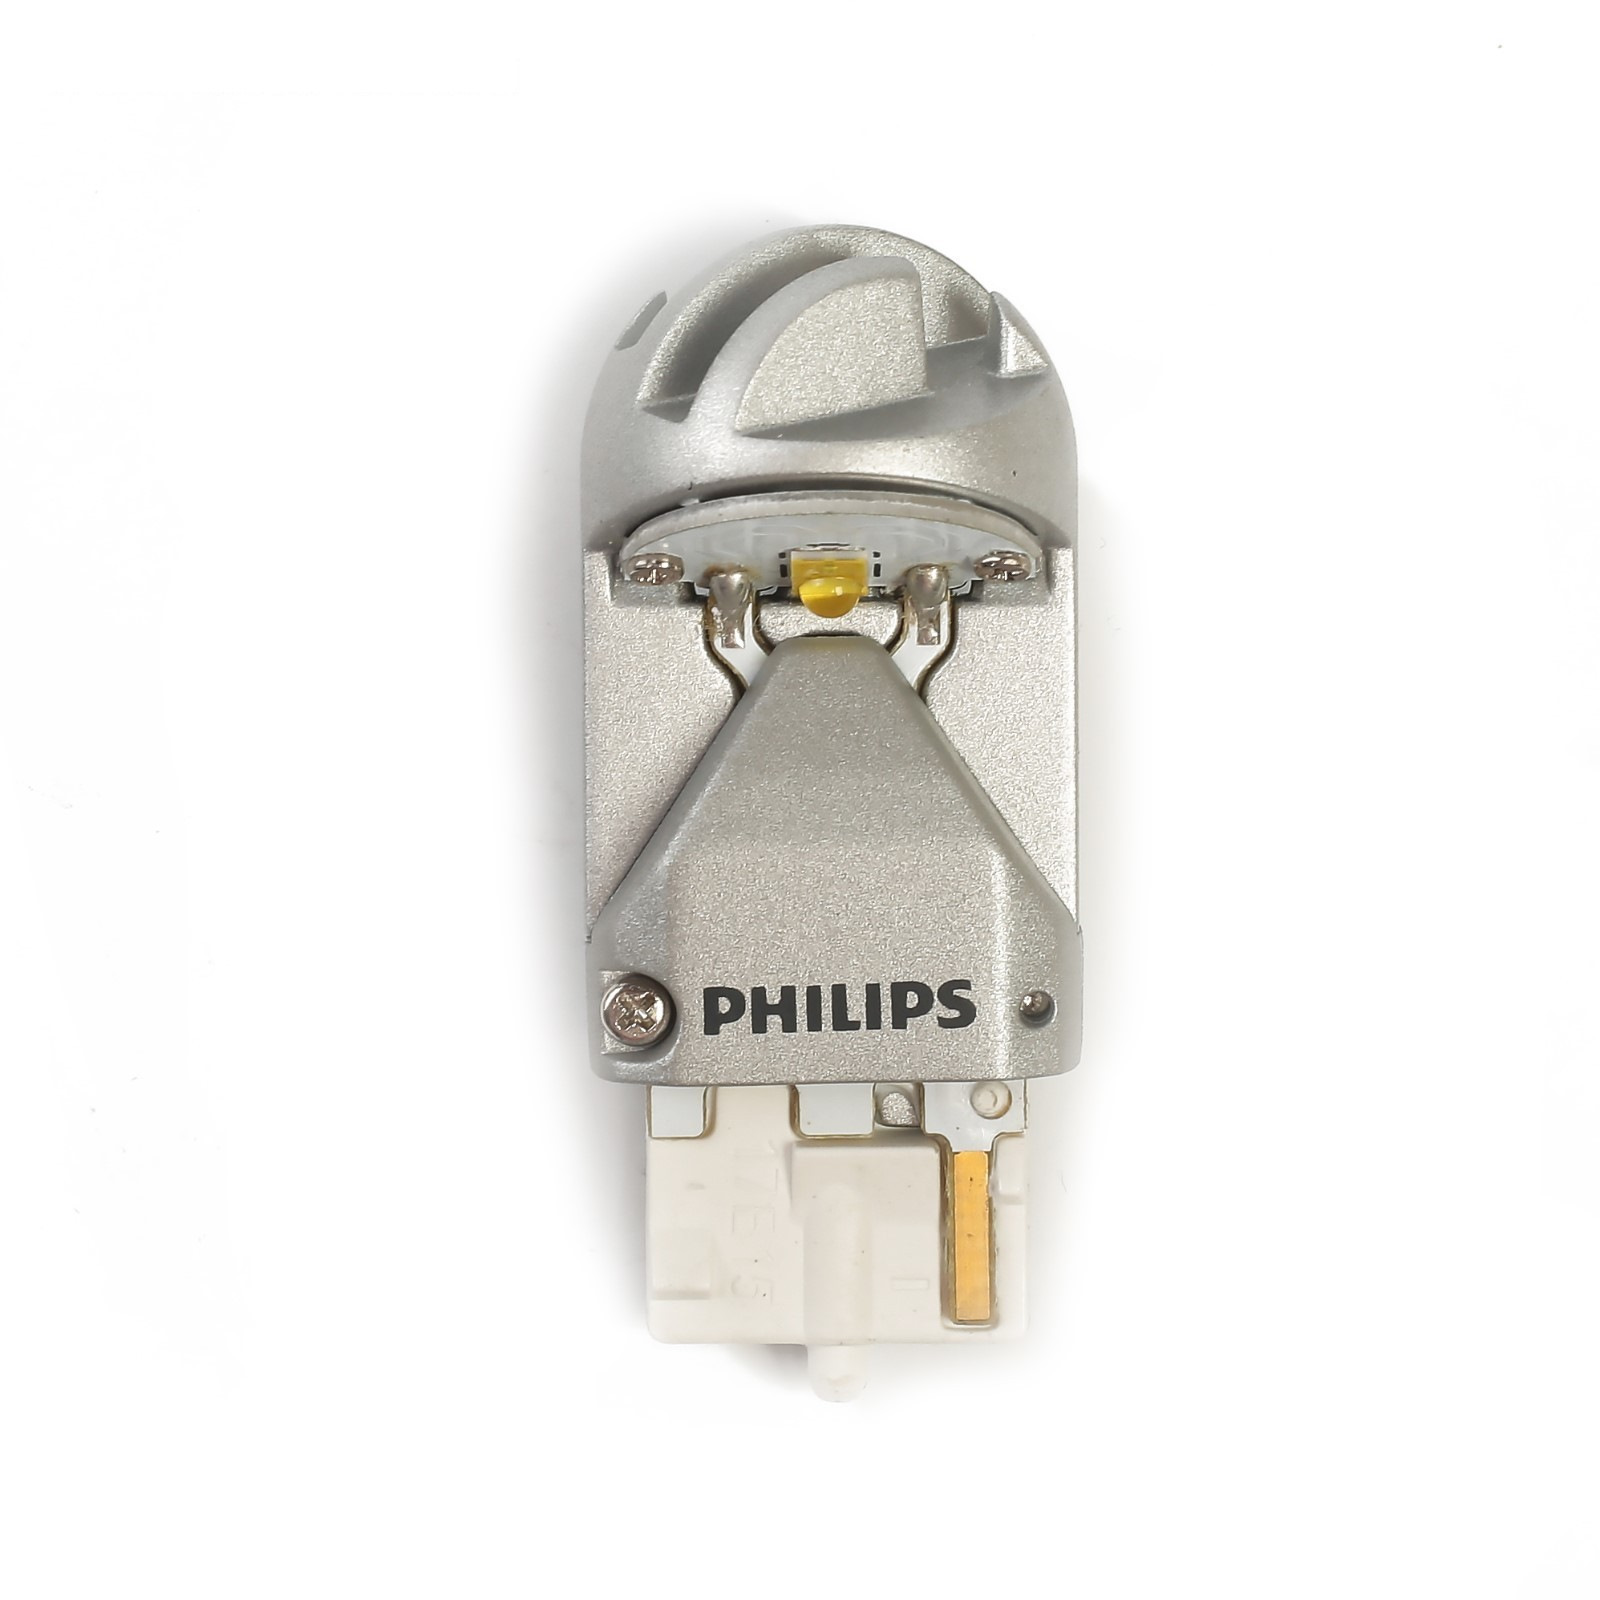 W16w 12v. W21w led Philips. Philips w21w 12795x1. W16w лампа светодиодная Philips. W21/5v лампа светодиодная Philips.